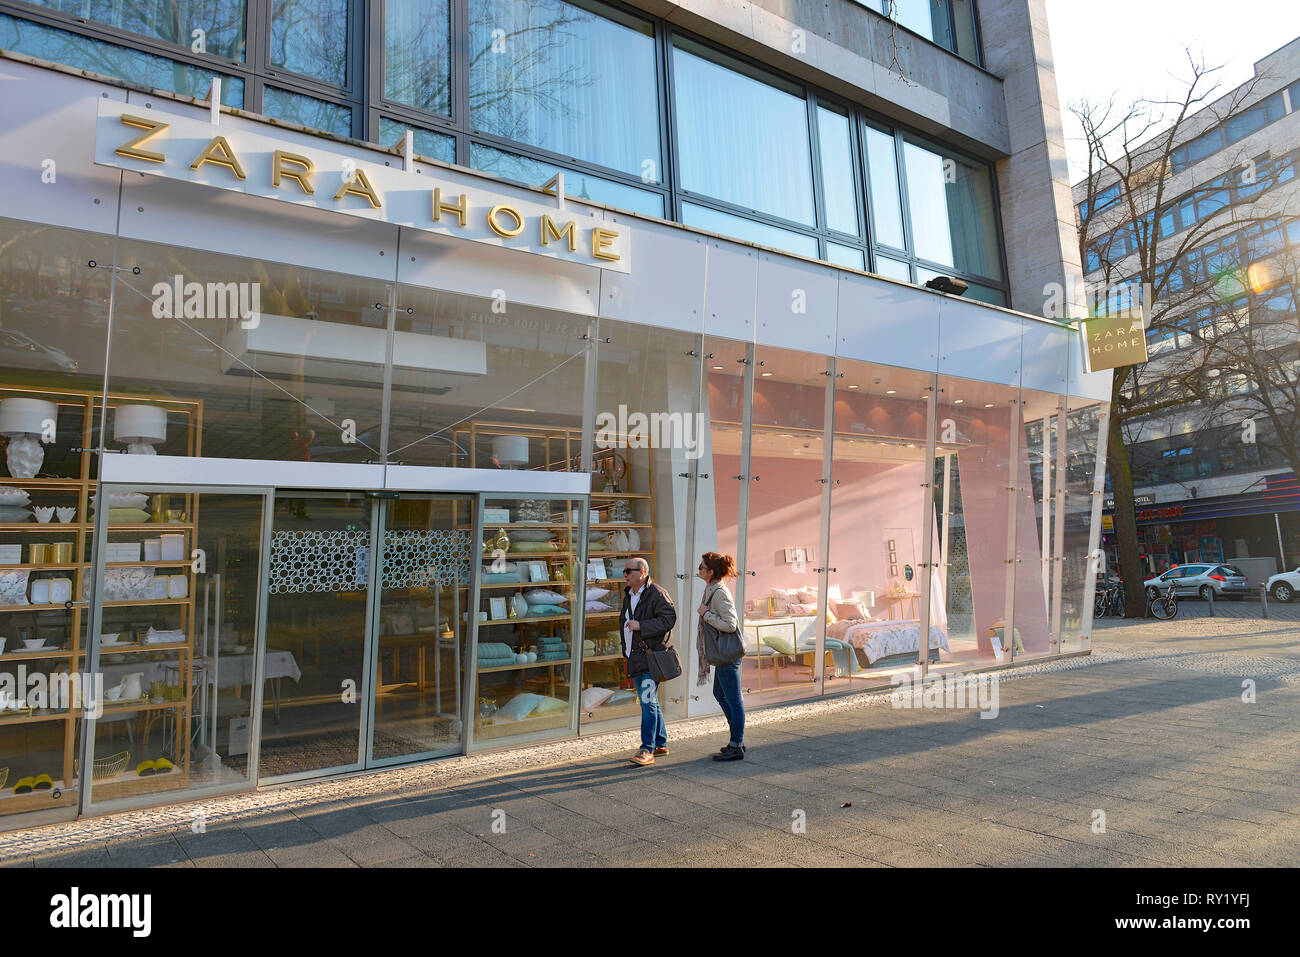 Zara shop window display hi-res stock photography and images - Alamy